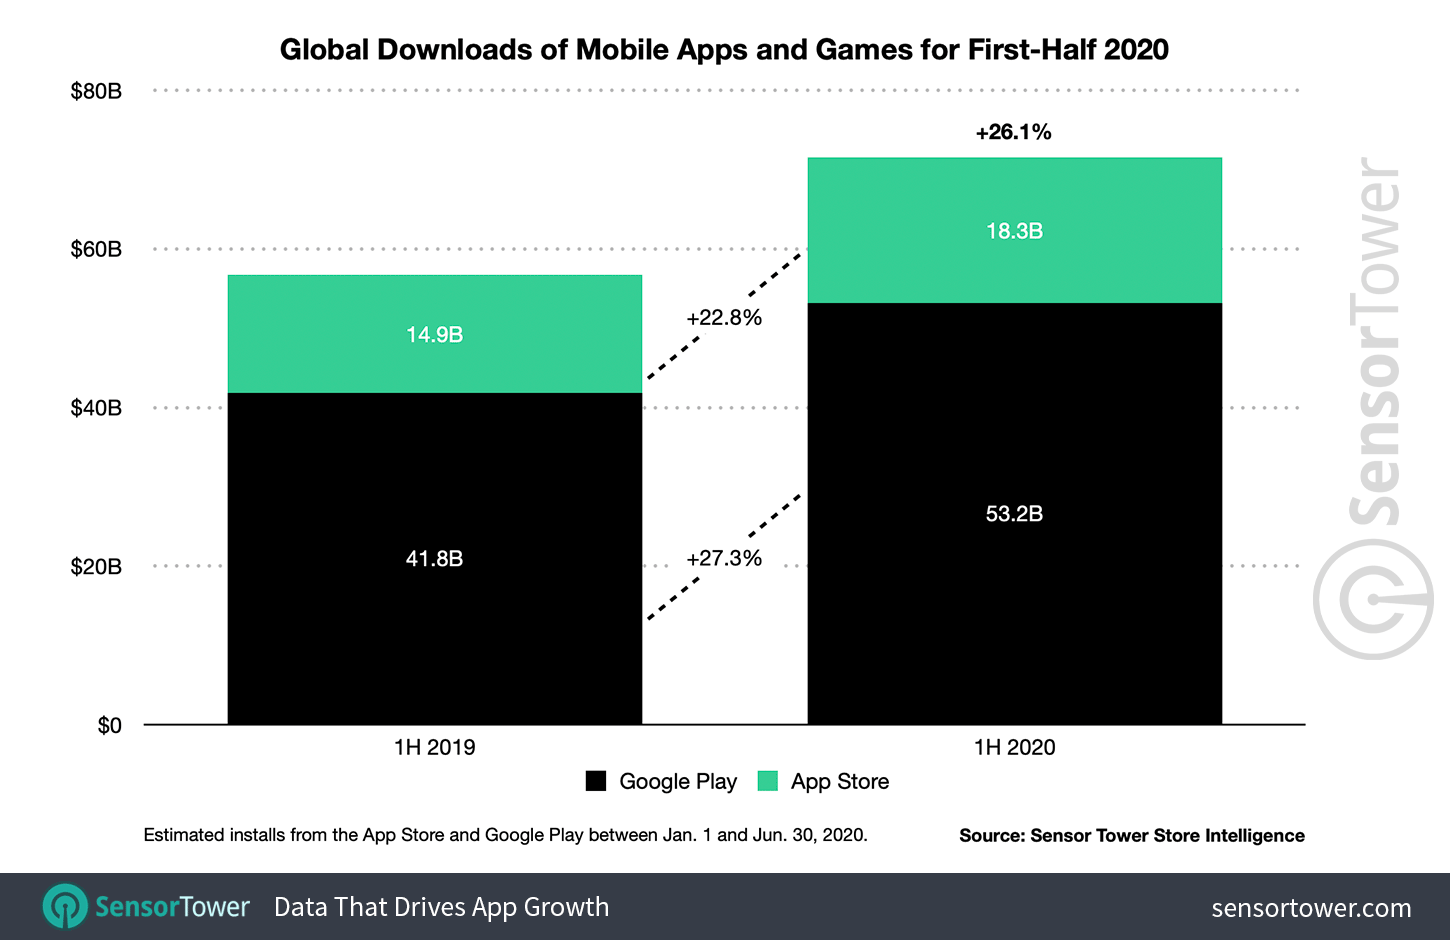 1H 2020 Mobile App Downloads